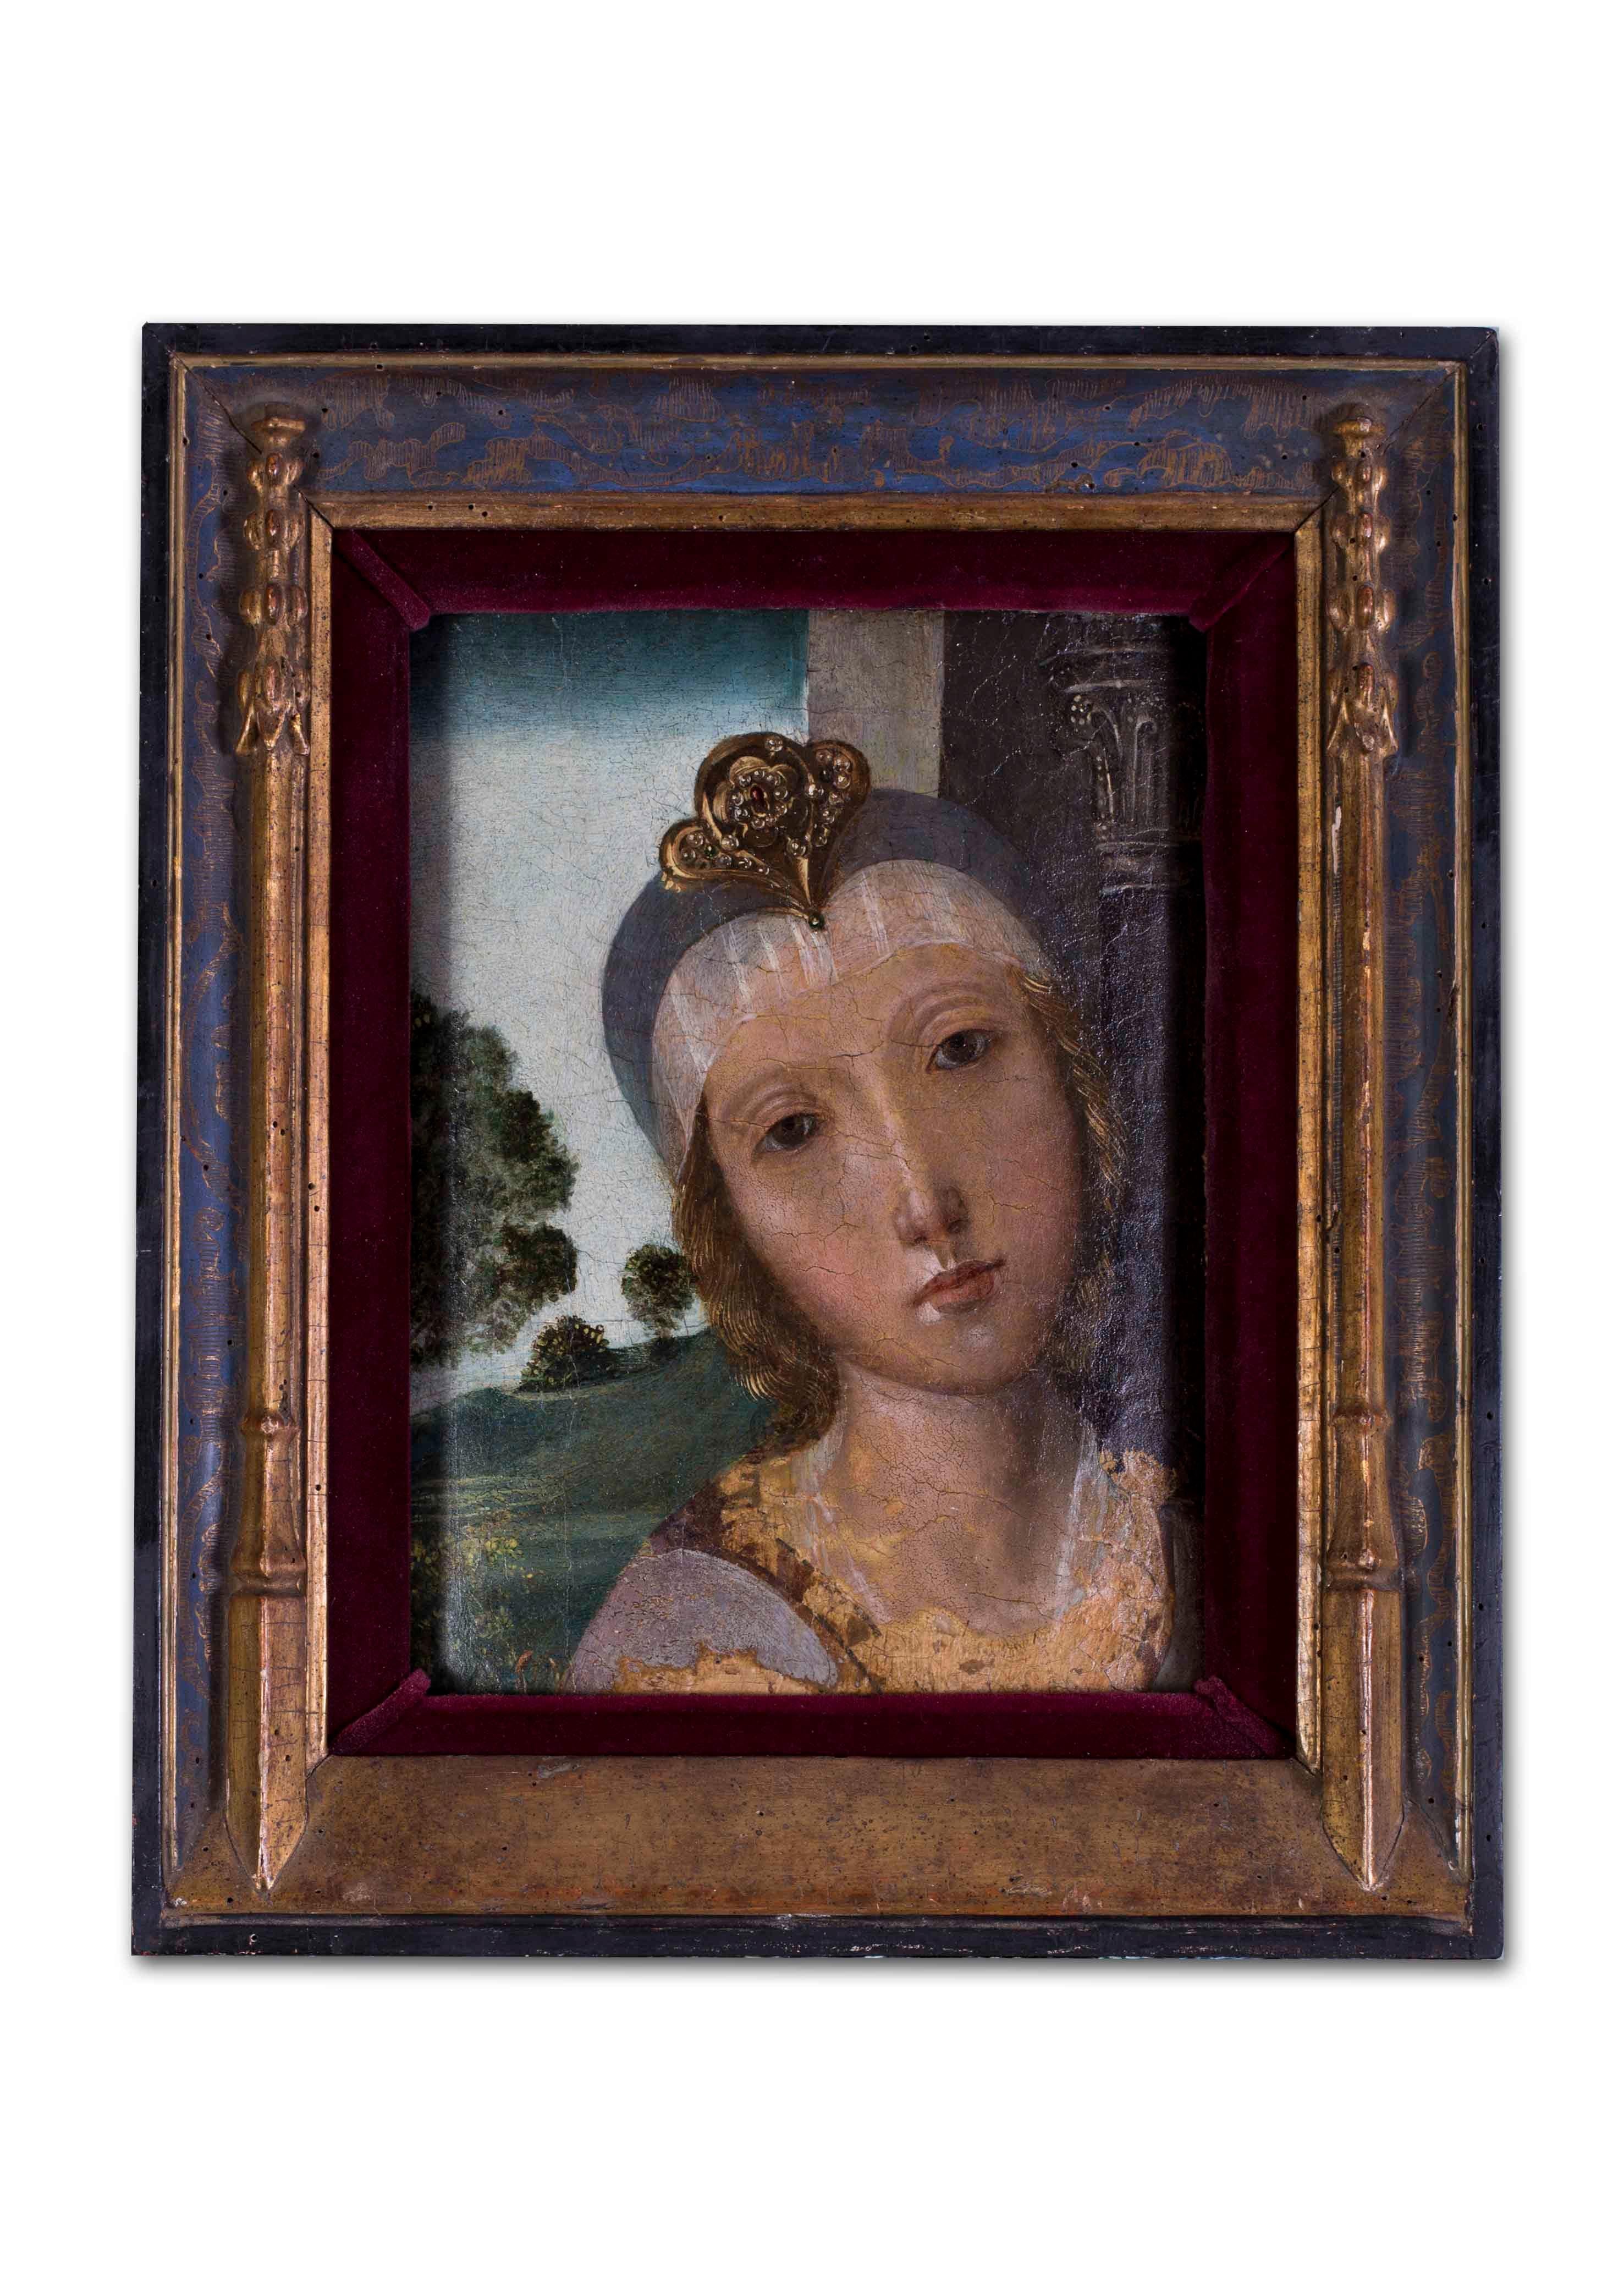 Italian Old Master portrait in the manner of Botticelli, oil on panel 4